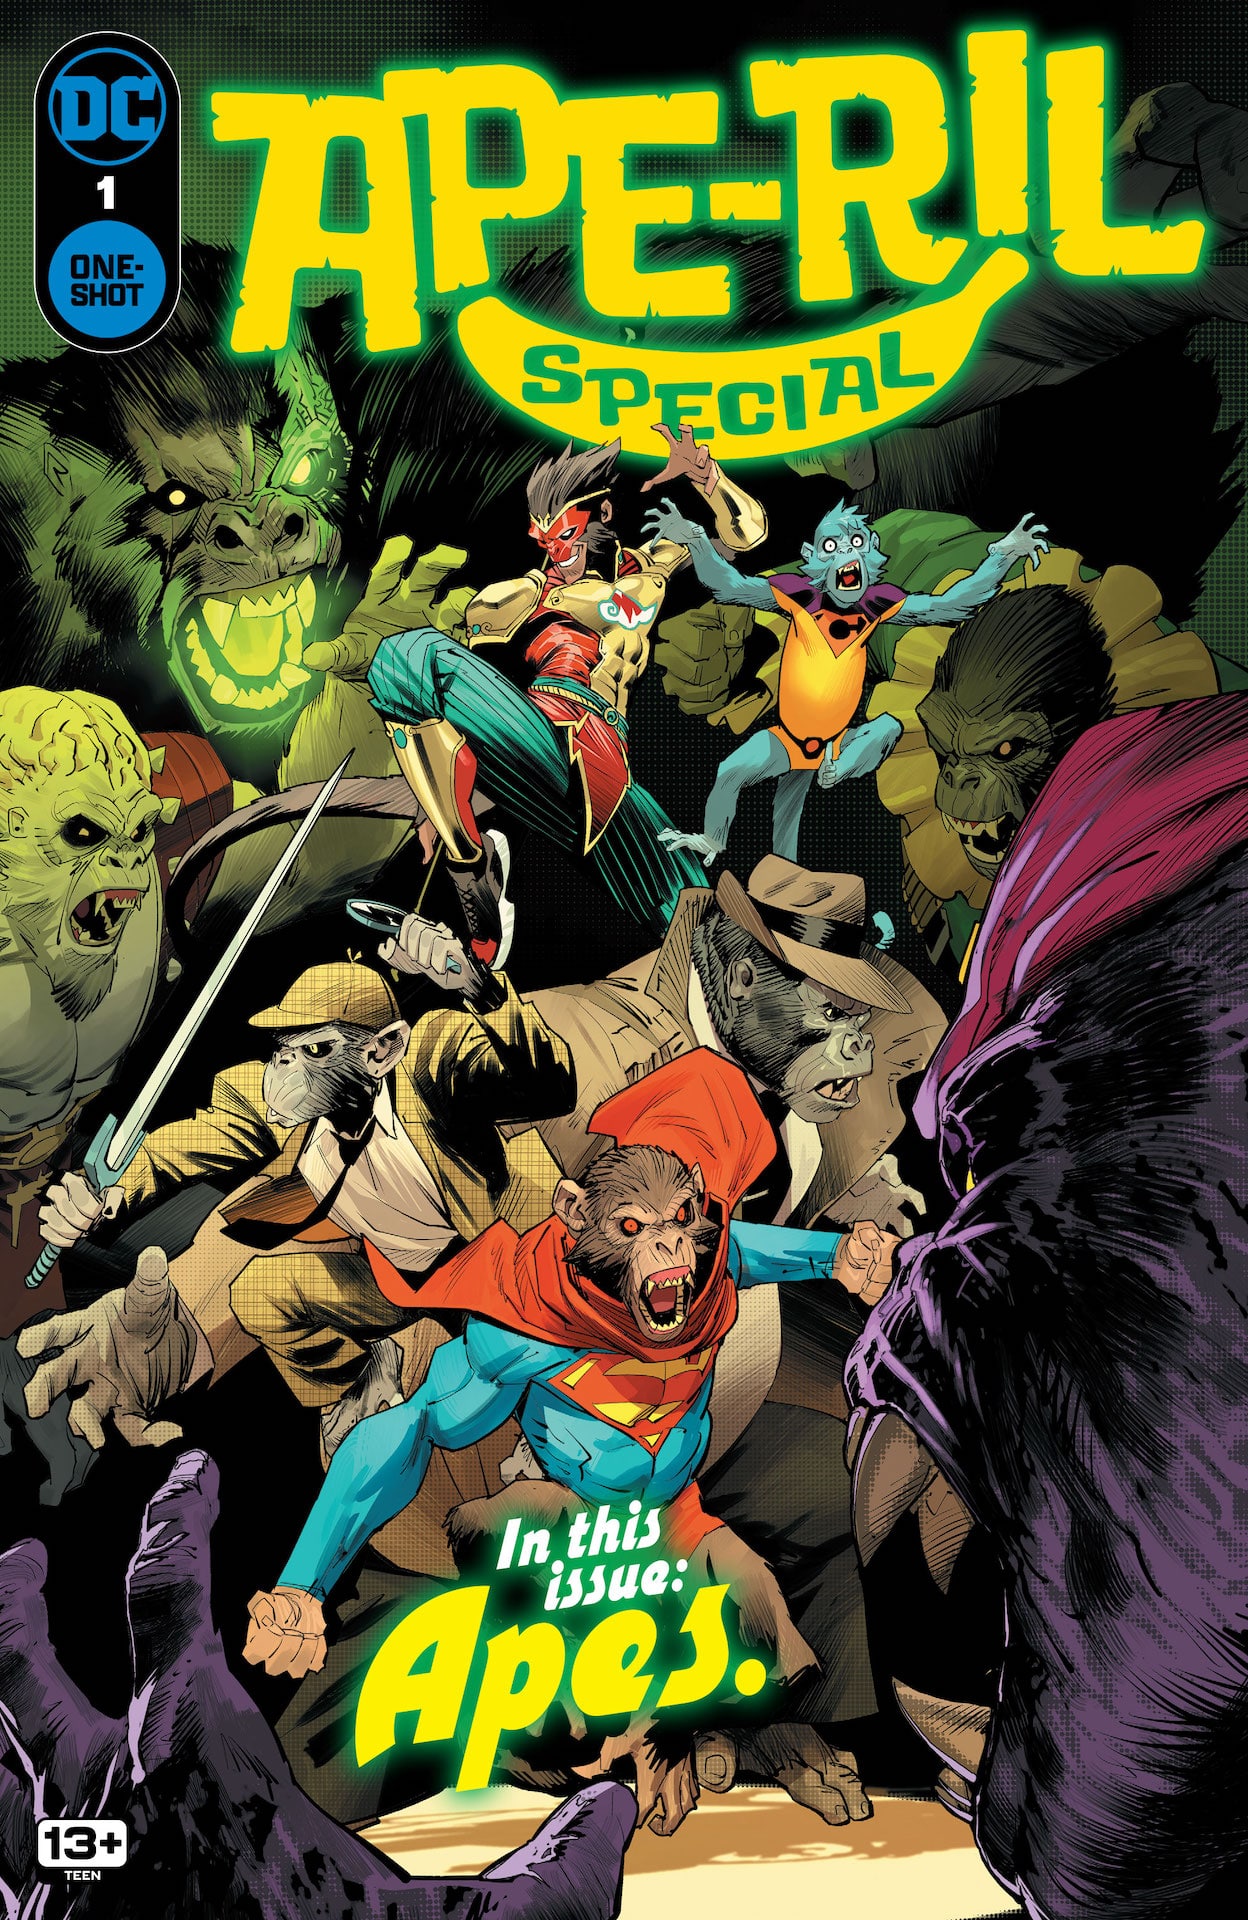 DC Preview: DC's Ape-ril Special #1